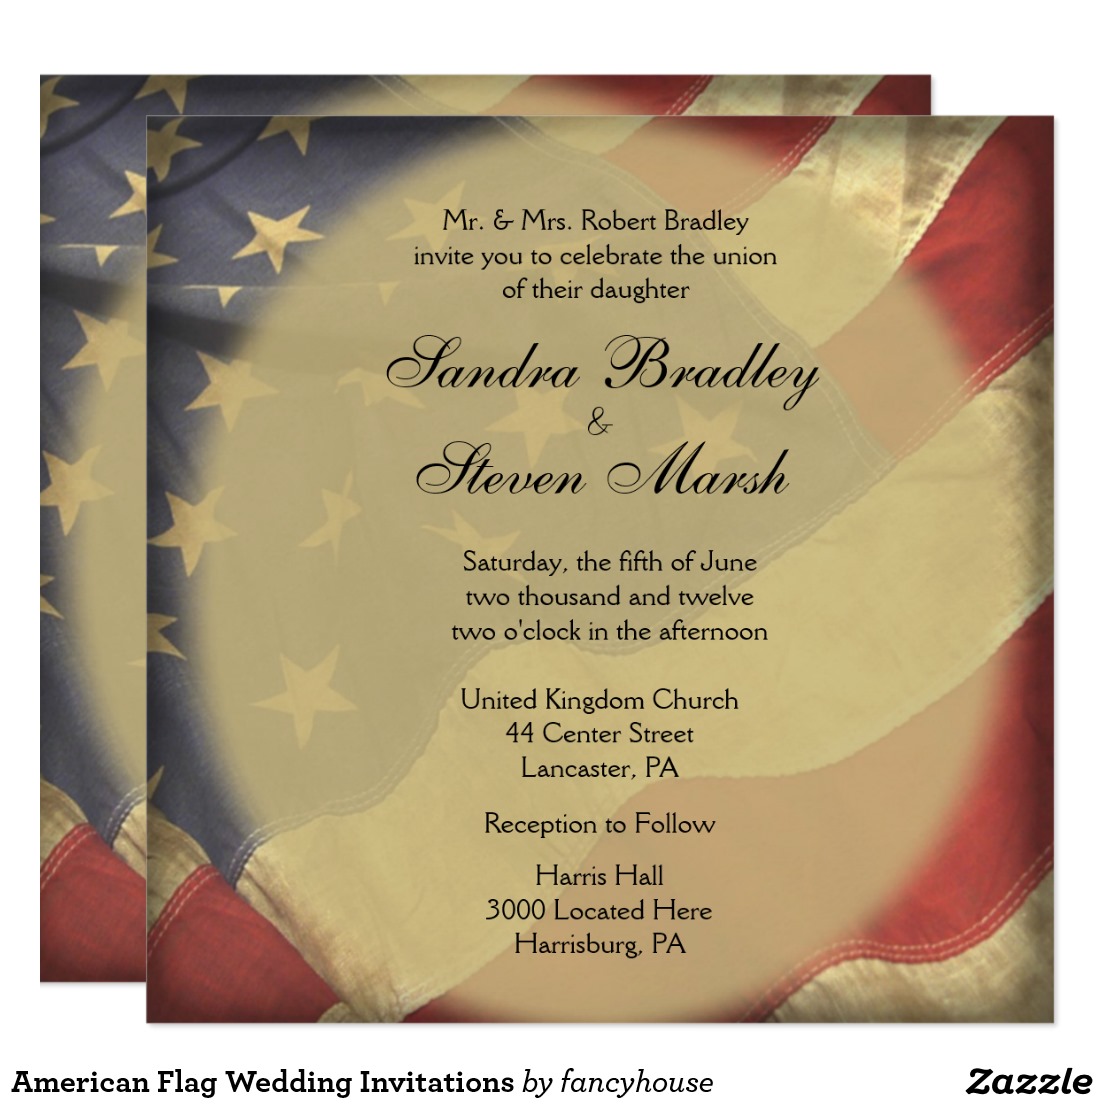 American Flag Wedding Invitations